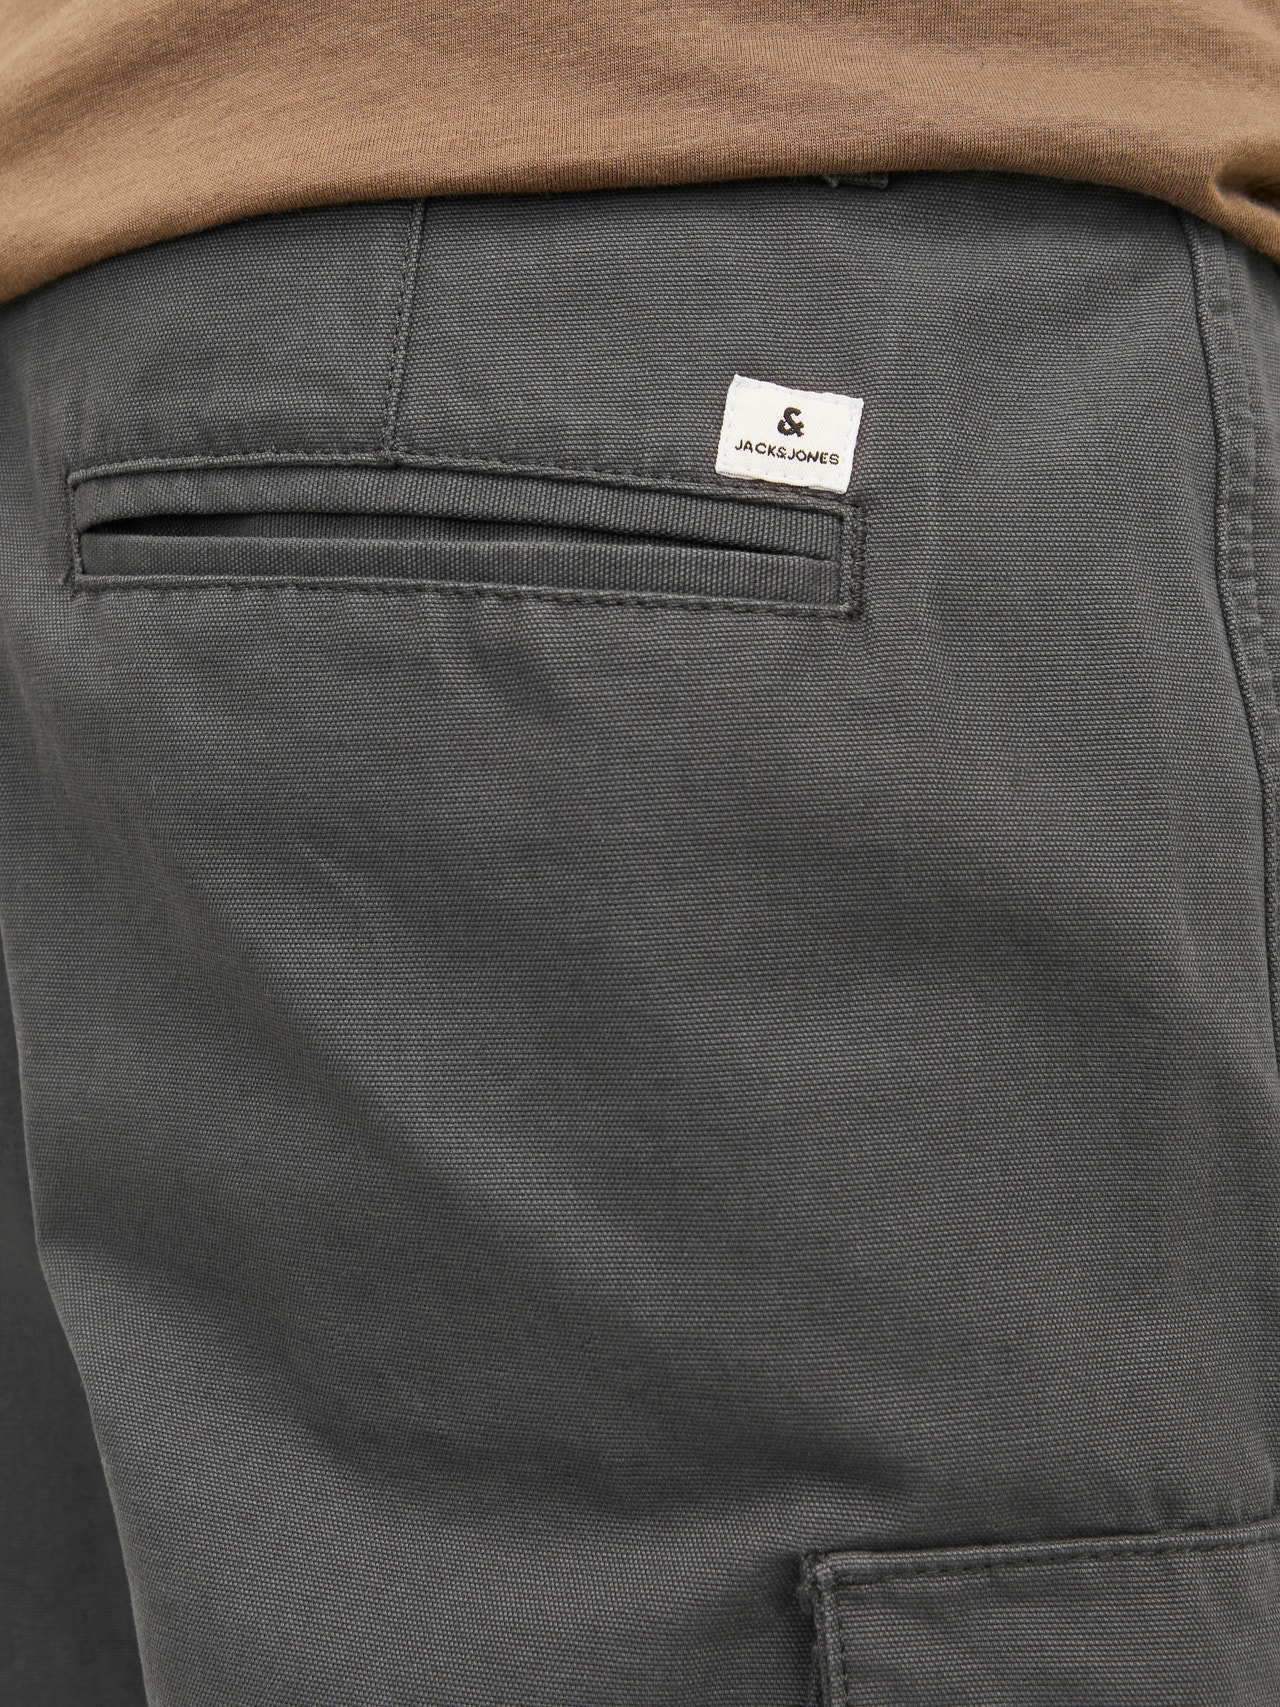 Jack & Jones Regular Fit Cargo shorts -Asphalt - 12248685